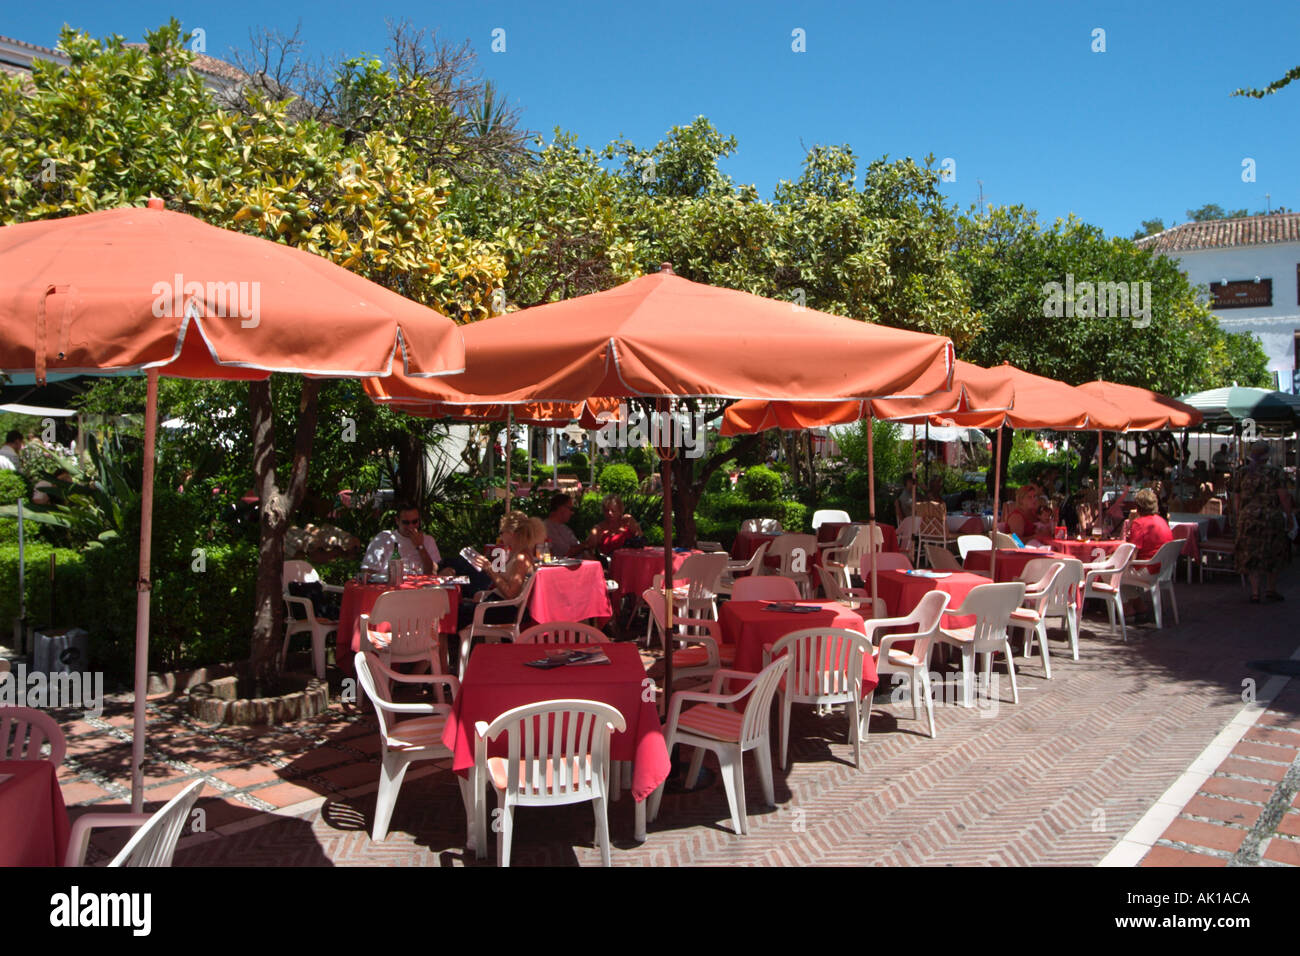 Pavement cafe in the Plaza de los Naranjos, Casco Antiguo (Old Town), Marbella, Costa del Sol, Andalusia, Spain Stock Photo